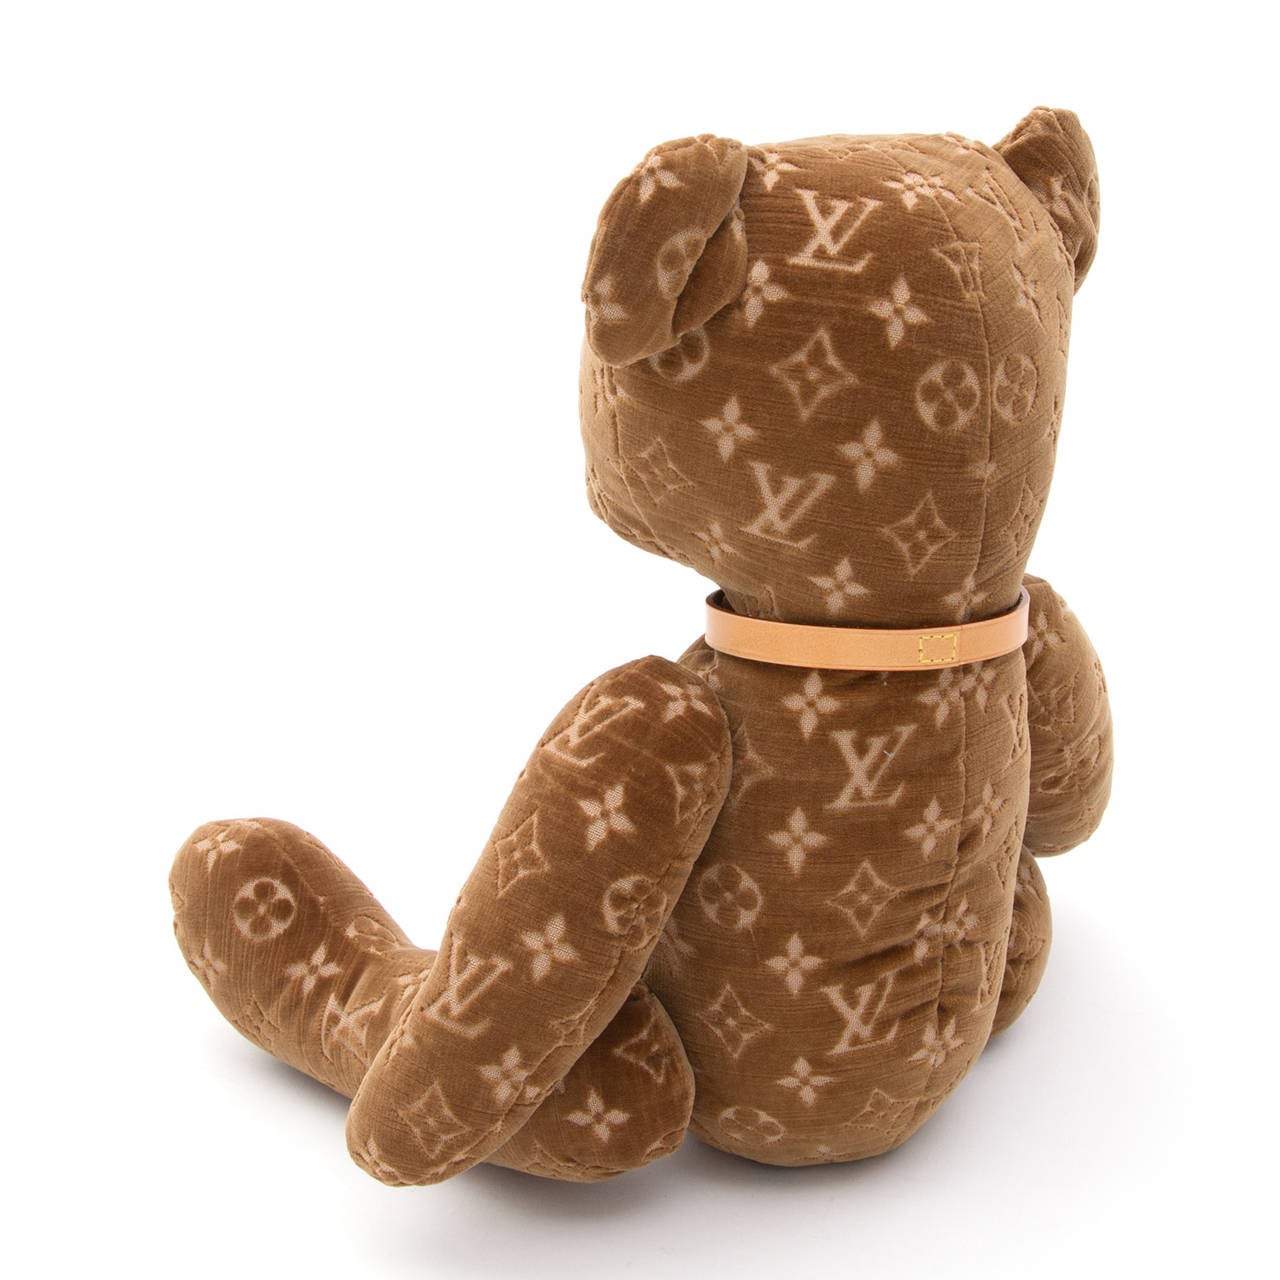 LOUIS VUITTON Monogram Teddy Bear Dou Dou Dudu Limited 026 / 500